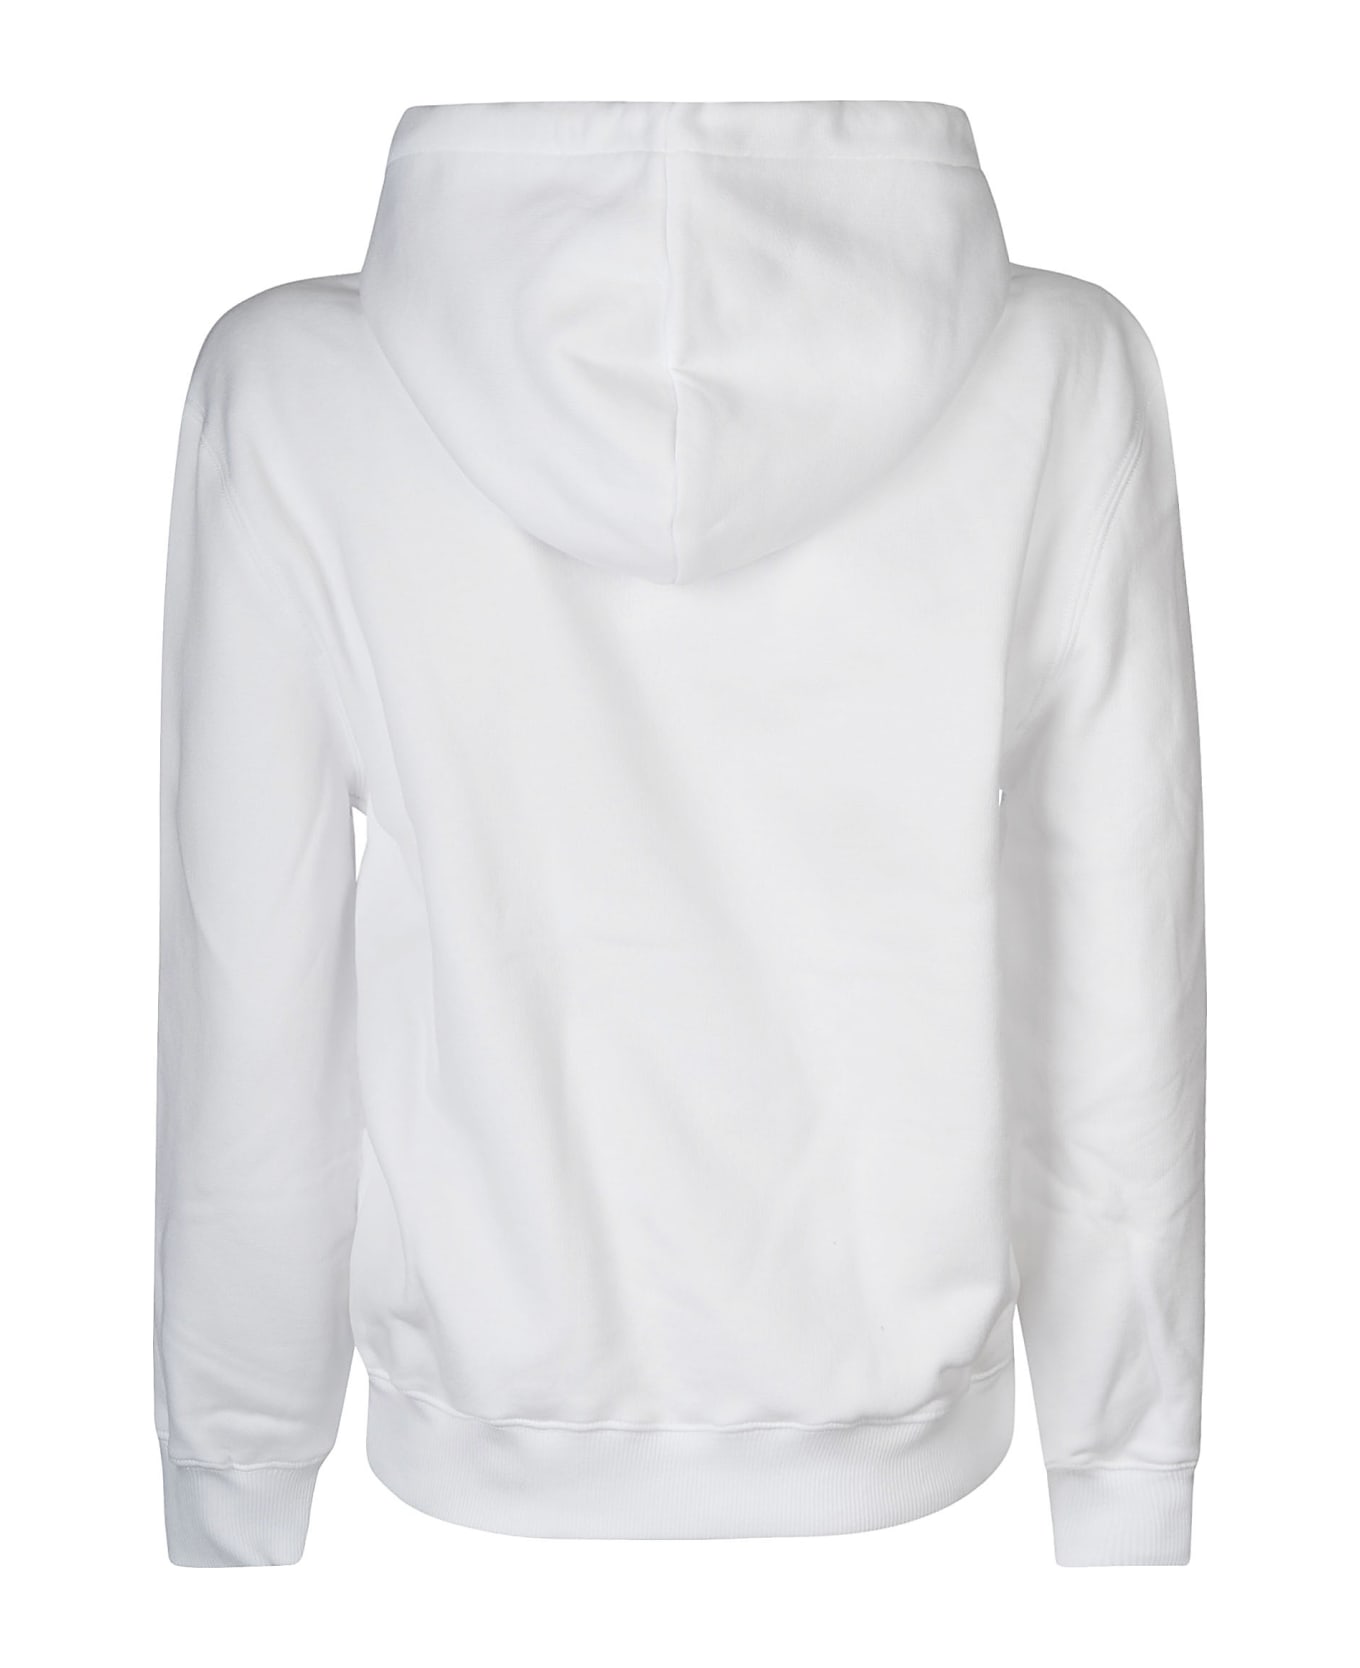 Lanvin Logo Embroidered Hooded Sweatshirt - Optic White フリース